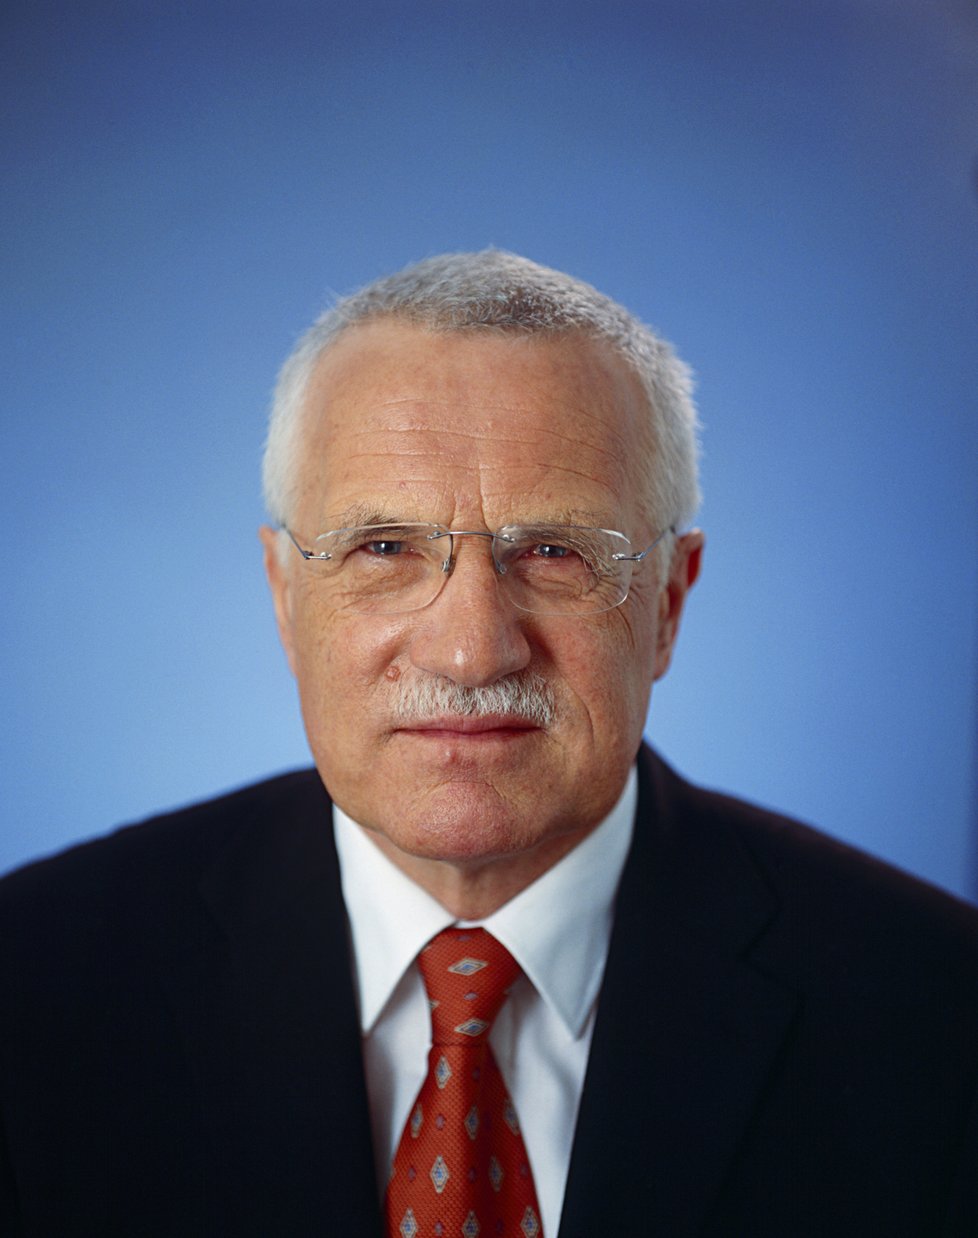 Prezident ČR Václav Klaus: 2003-2013